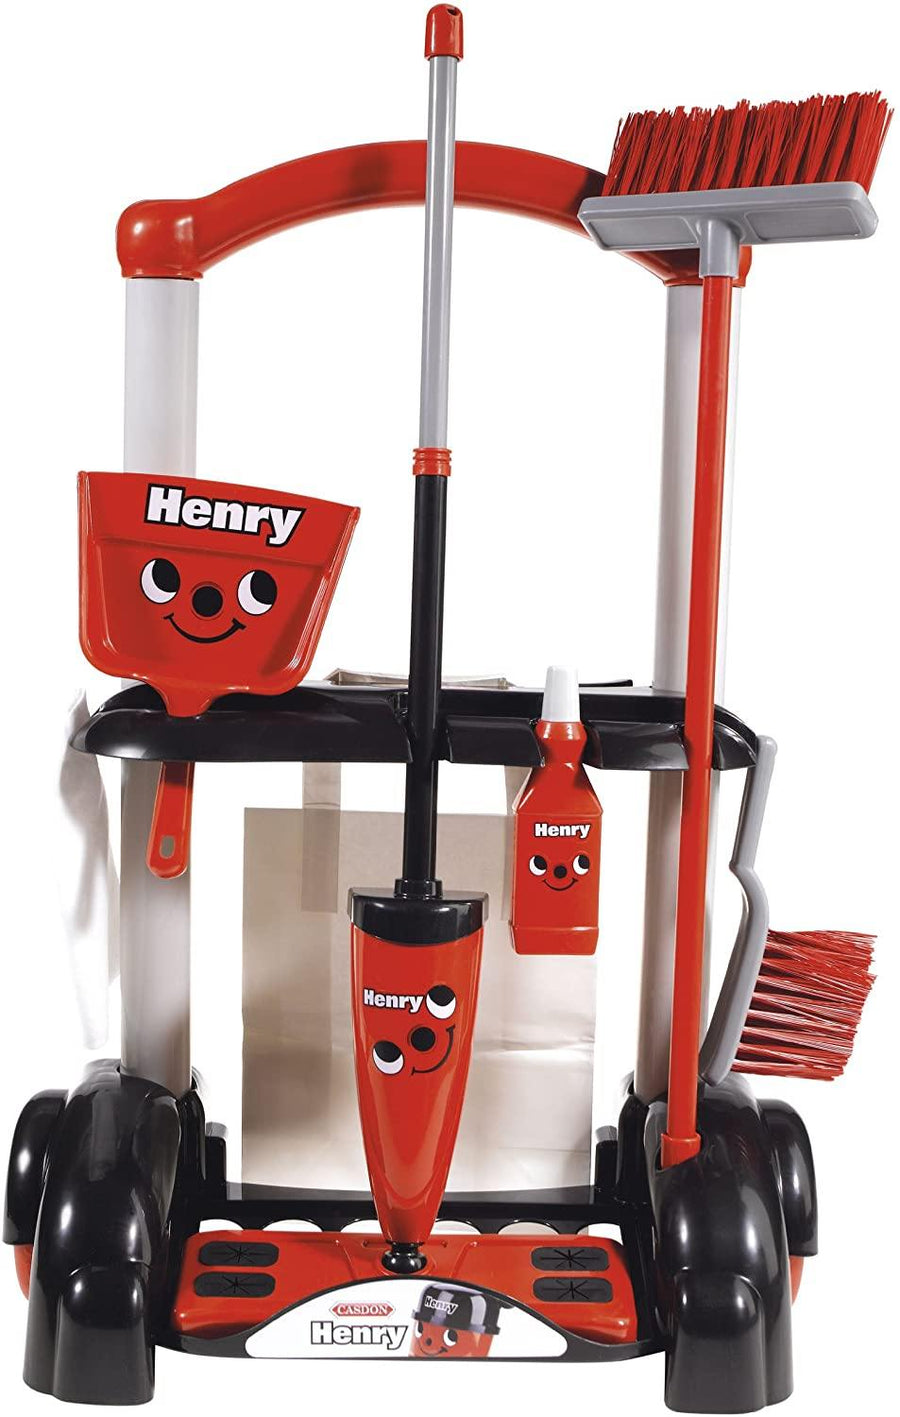 Casdon 630 Henry Cleaning Trolley Red - Yachew